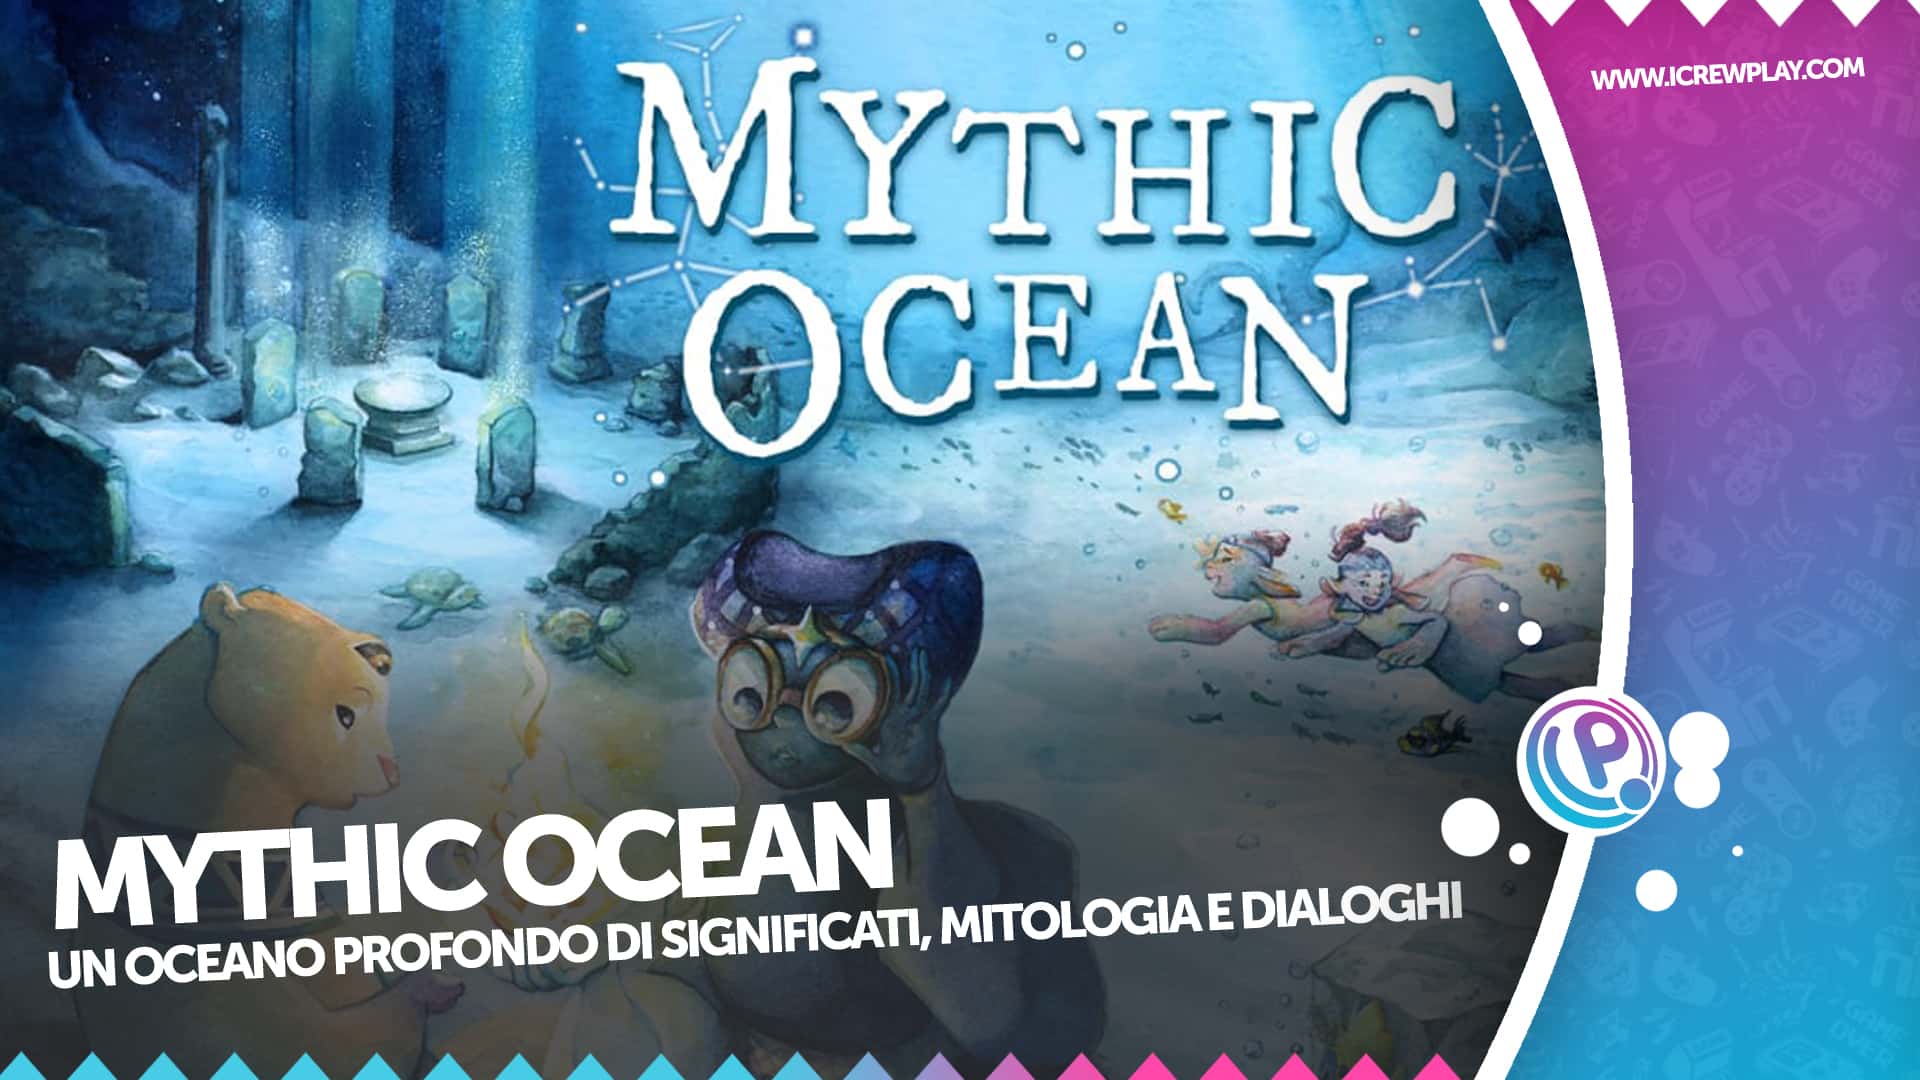 Mythic Ocean recensione